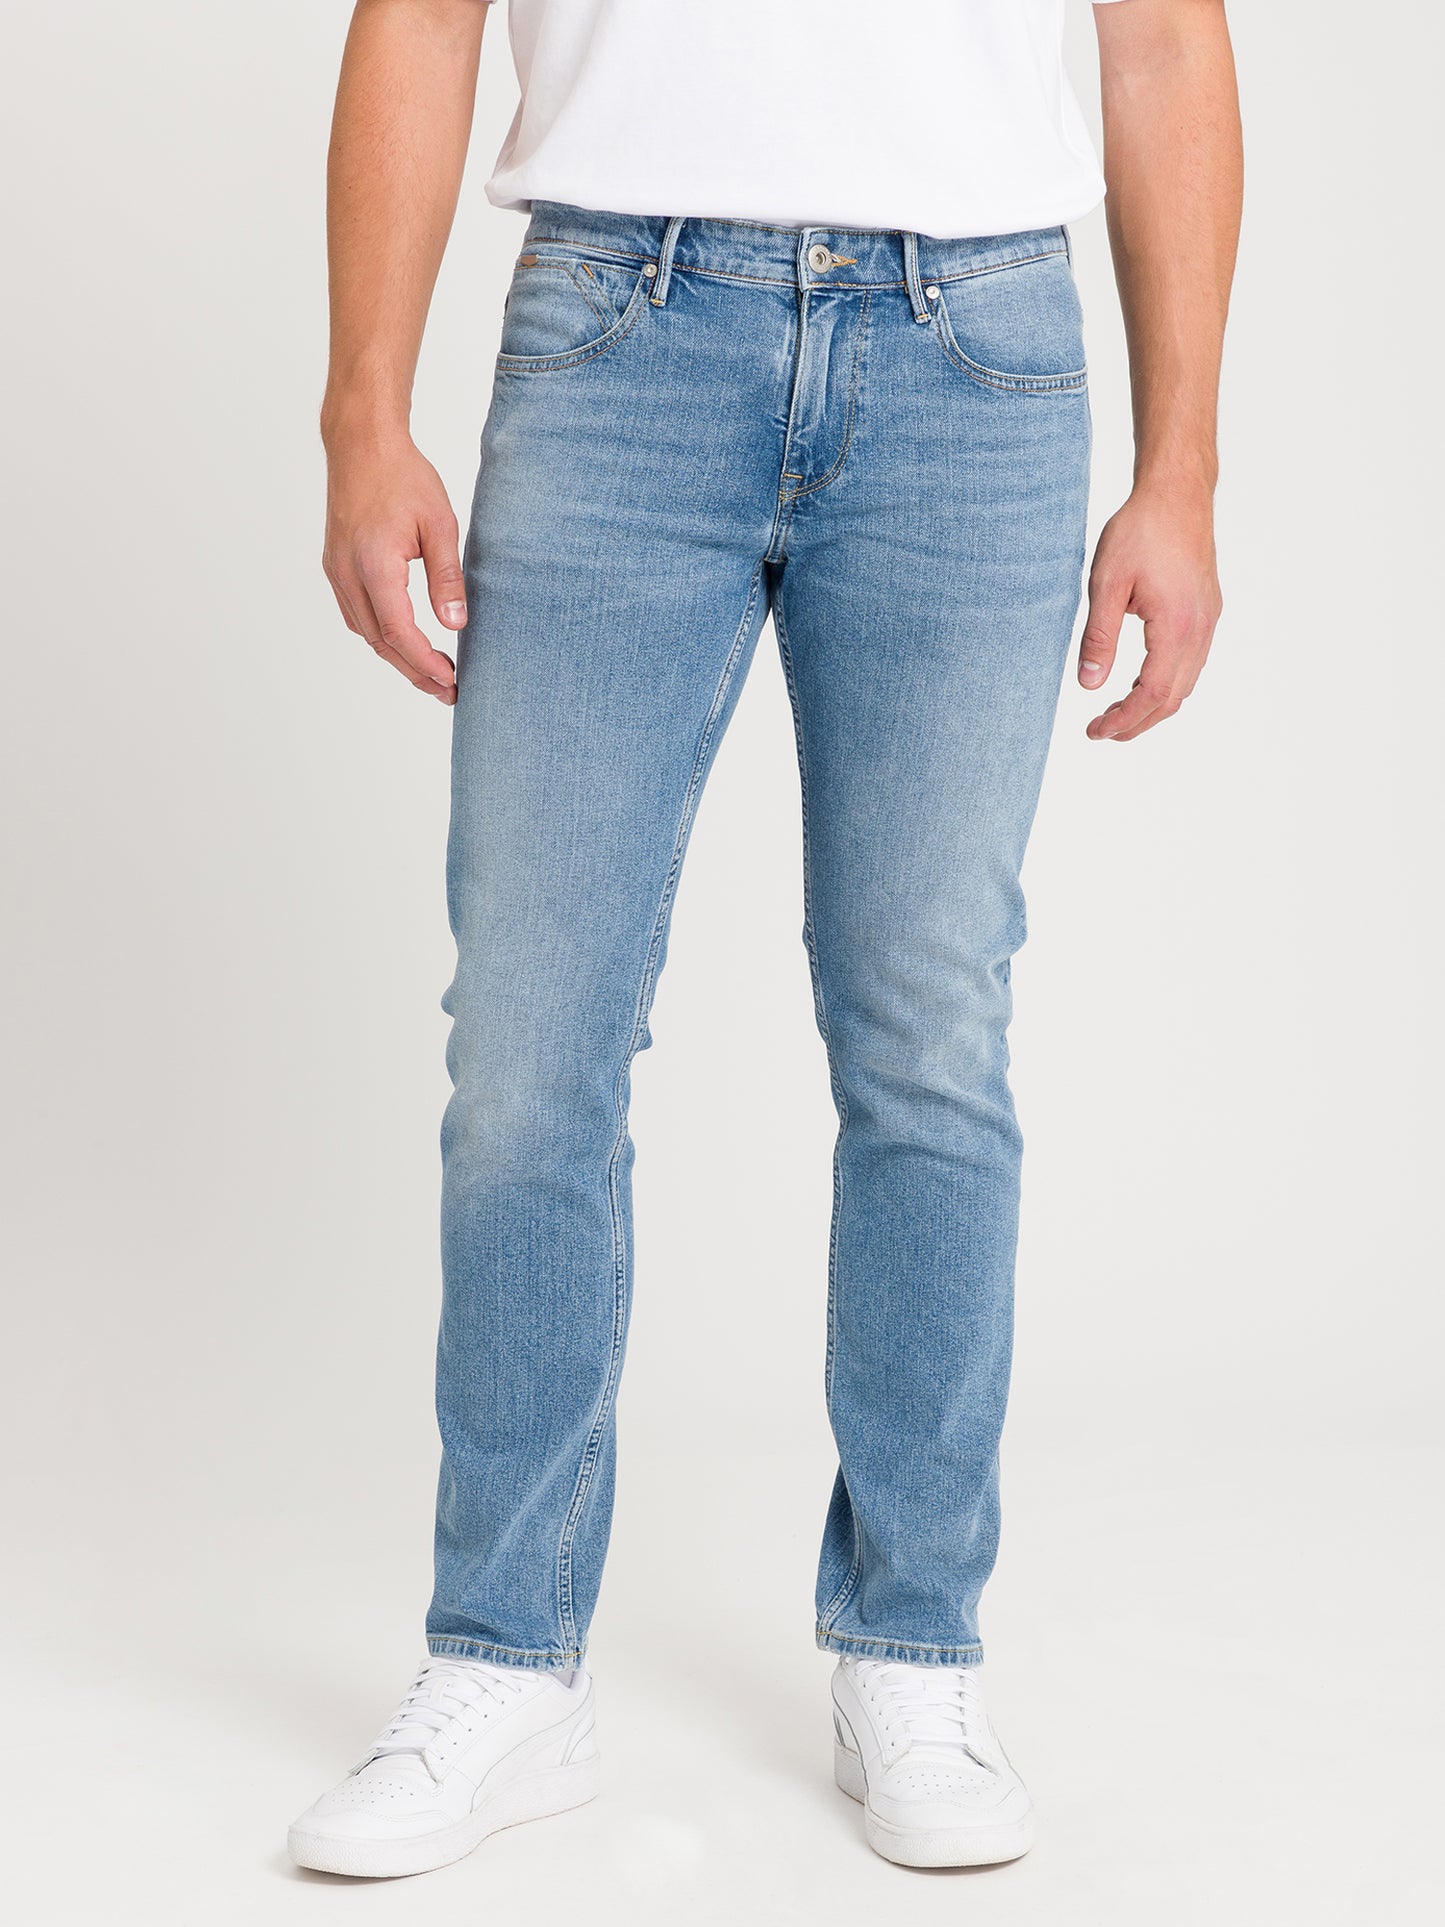 Dylan men's jeans regular fit regular waist straight leg light blue